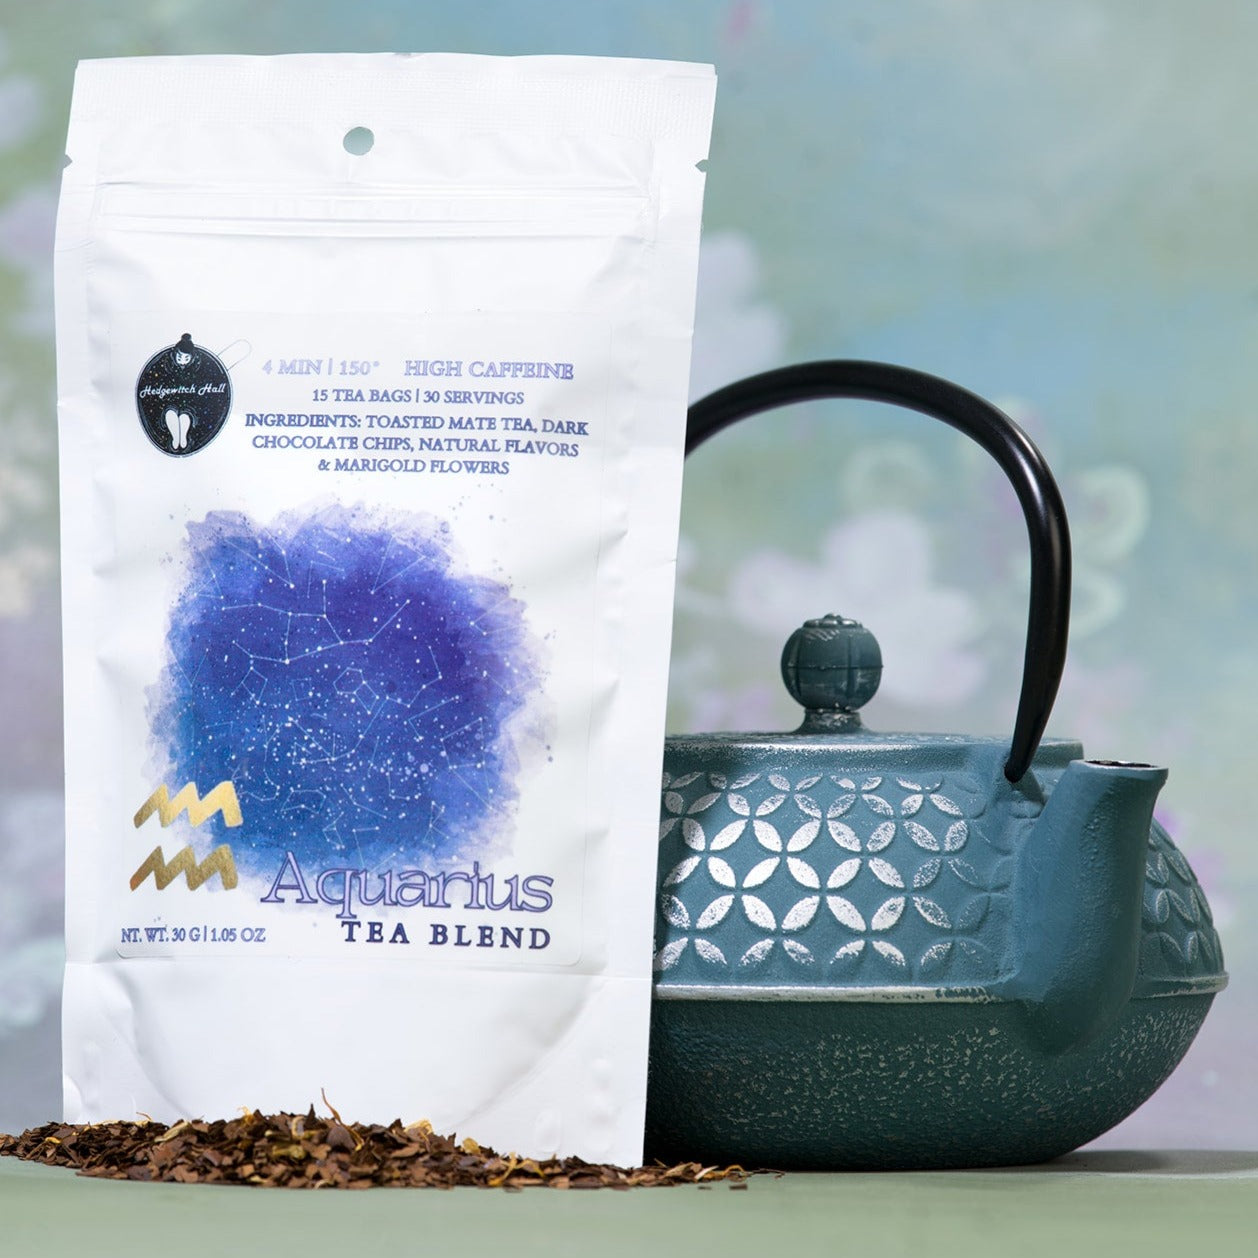 Product photo of Aquarius tea blend and teal teapot.